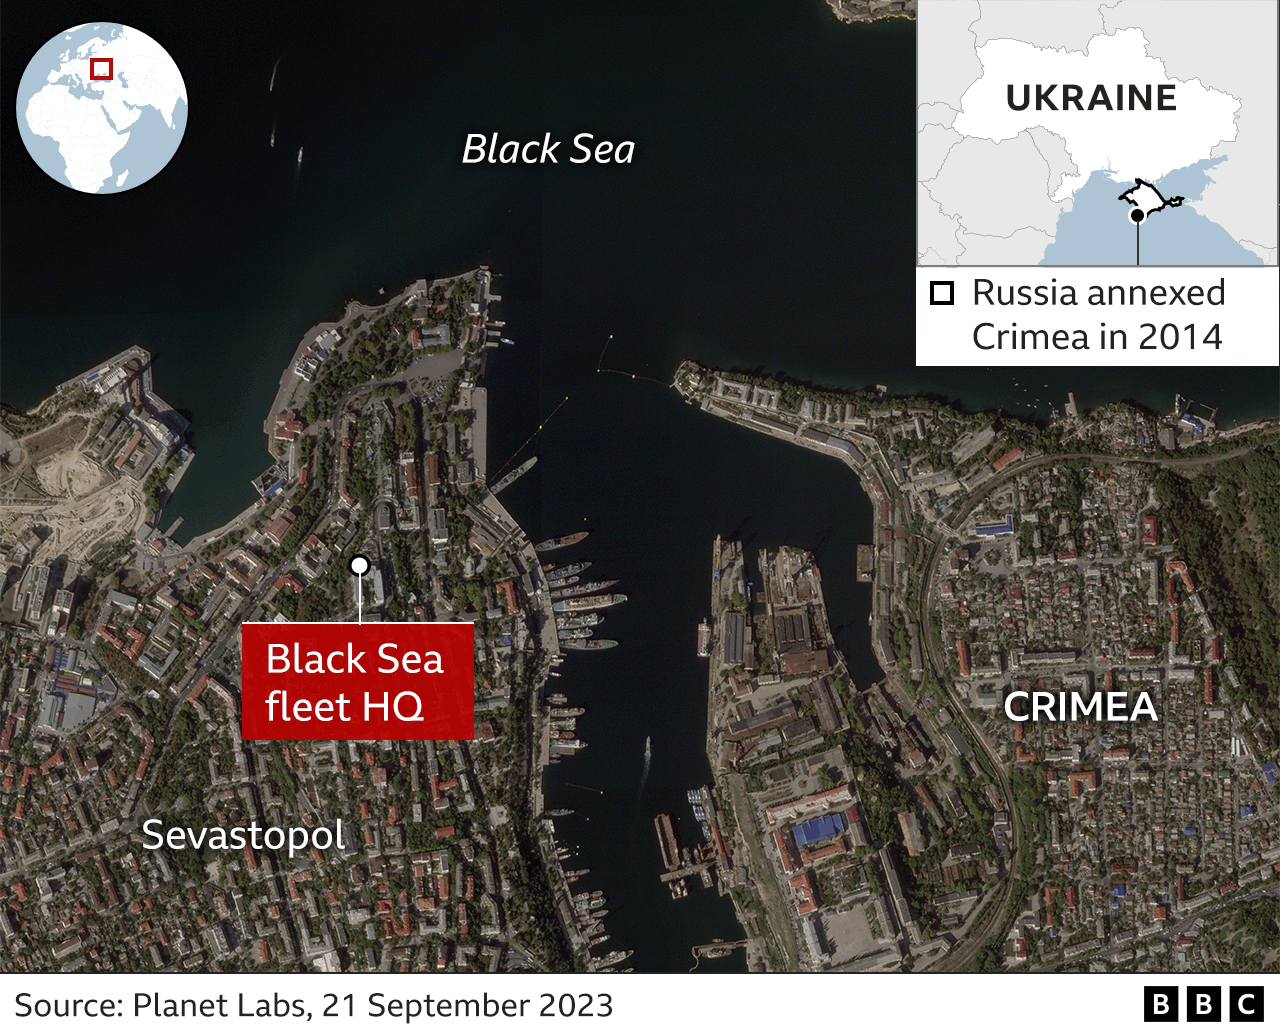 Location of Russia's Black Sea fleet HQ in Sevastopol